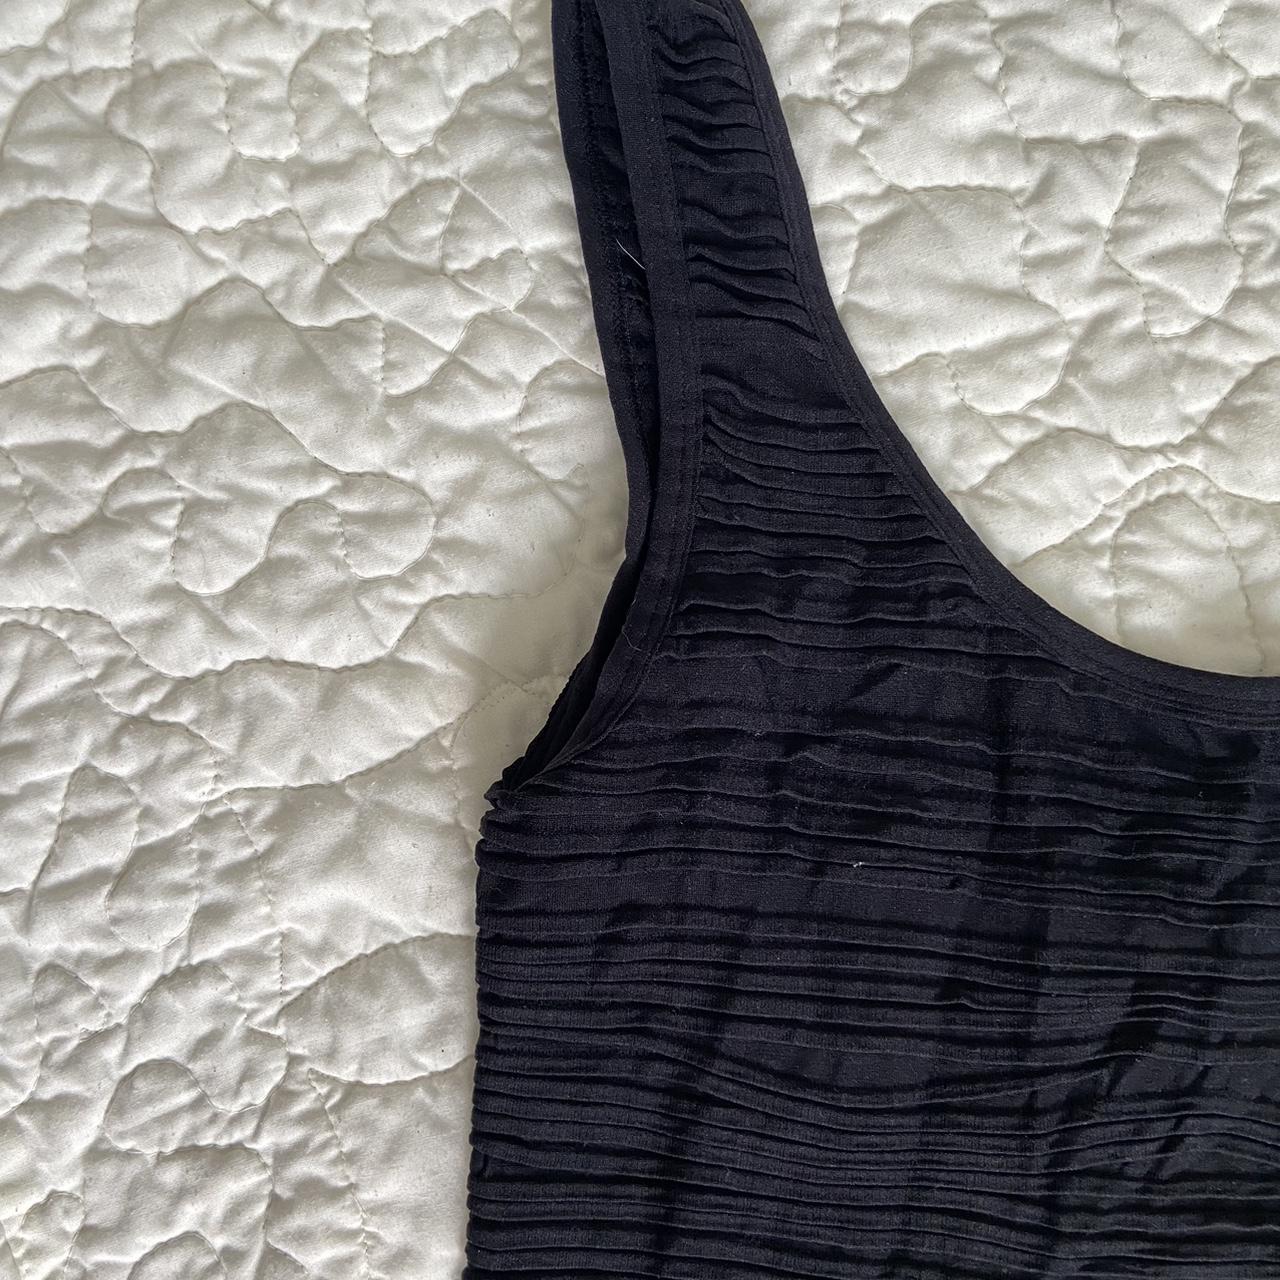 Product Image 4 - Black Mini Ribbed Dress
- textured